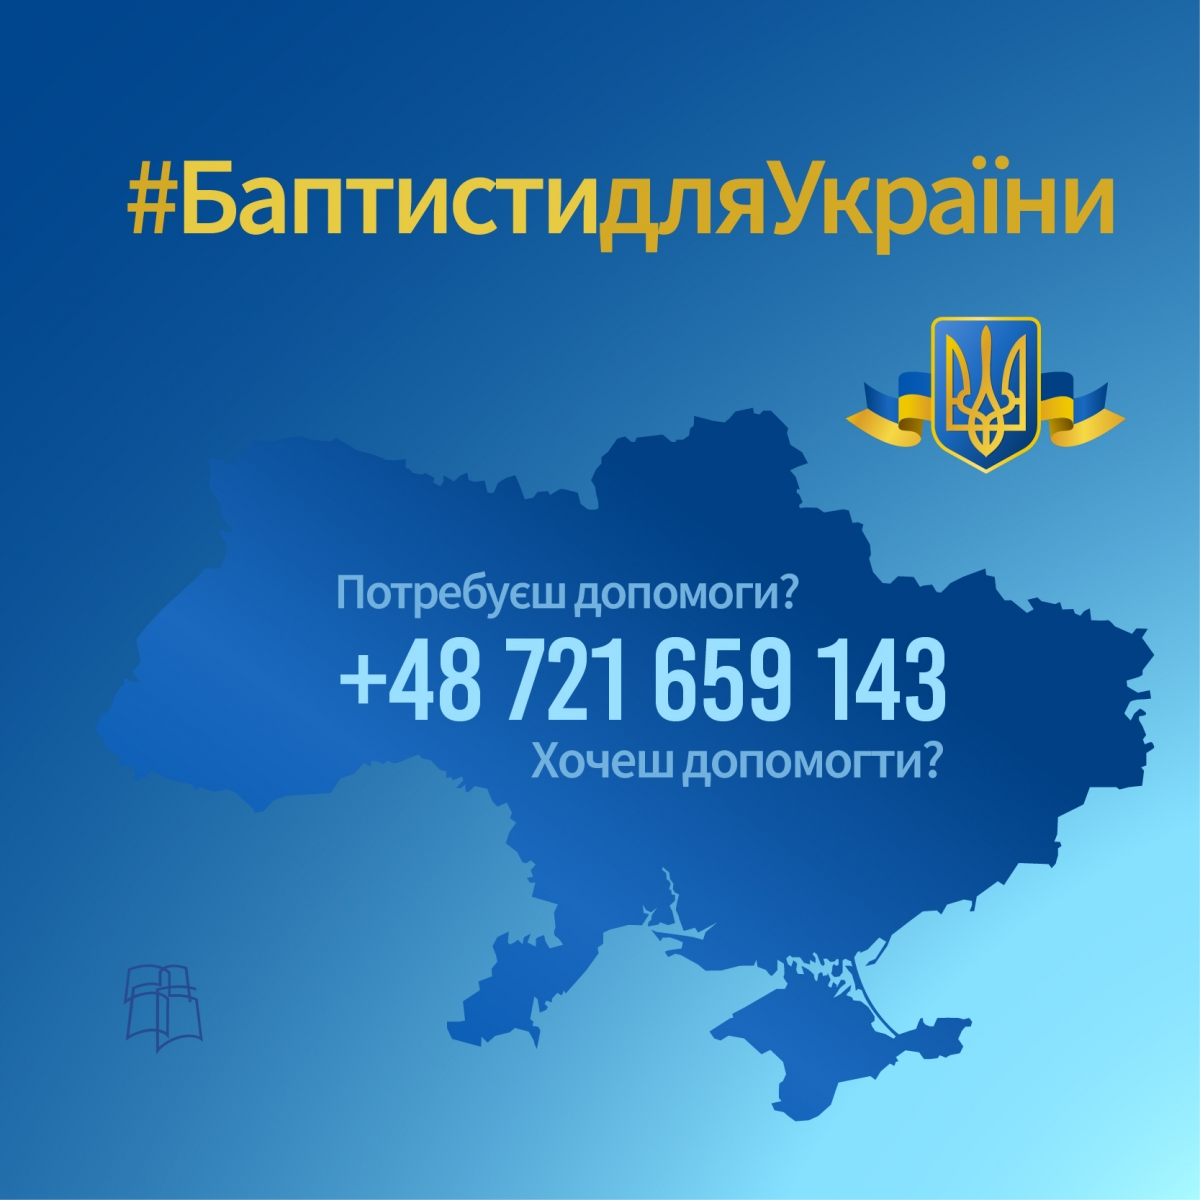 Допомога громадянам України